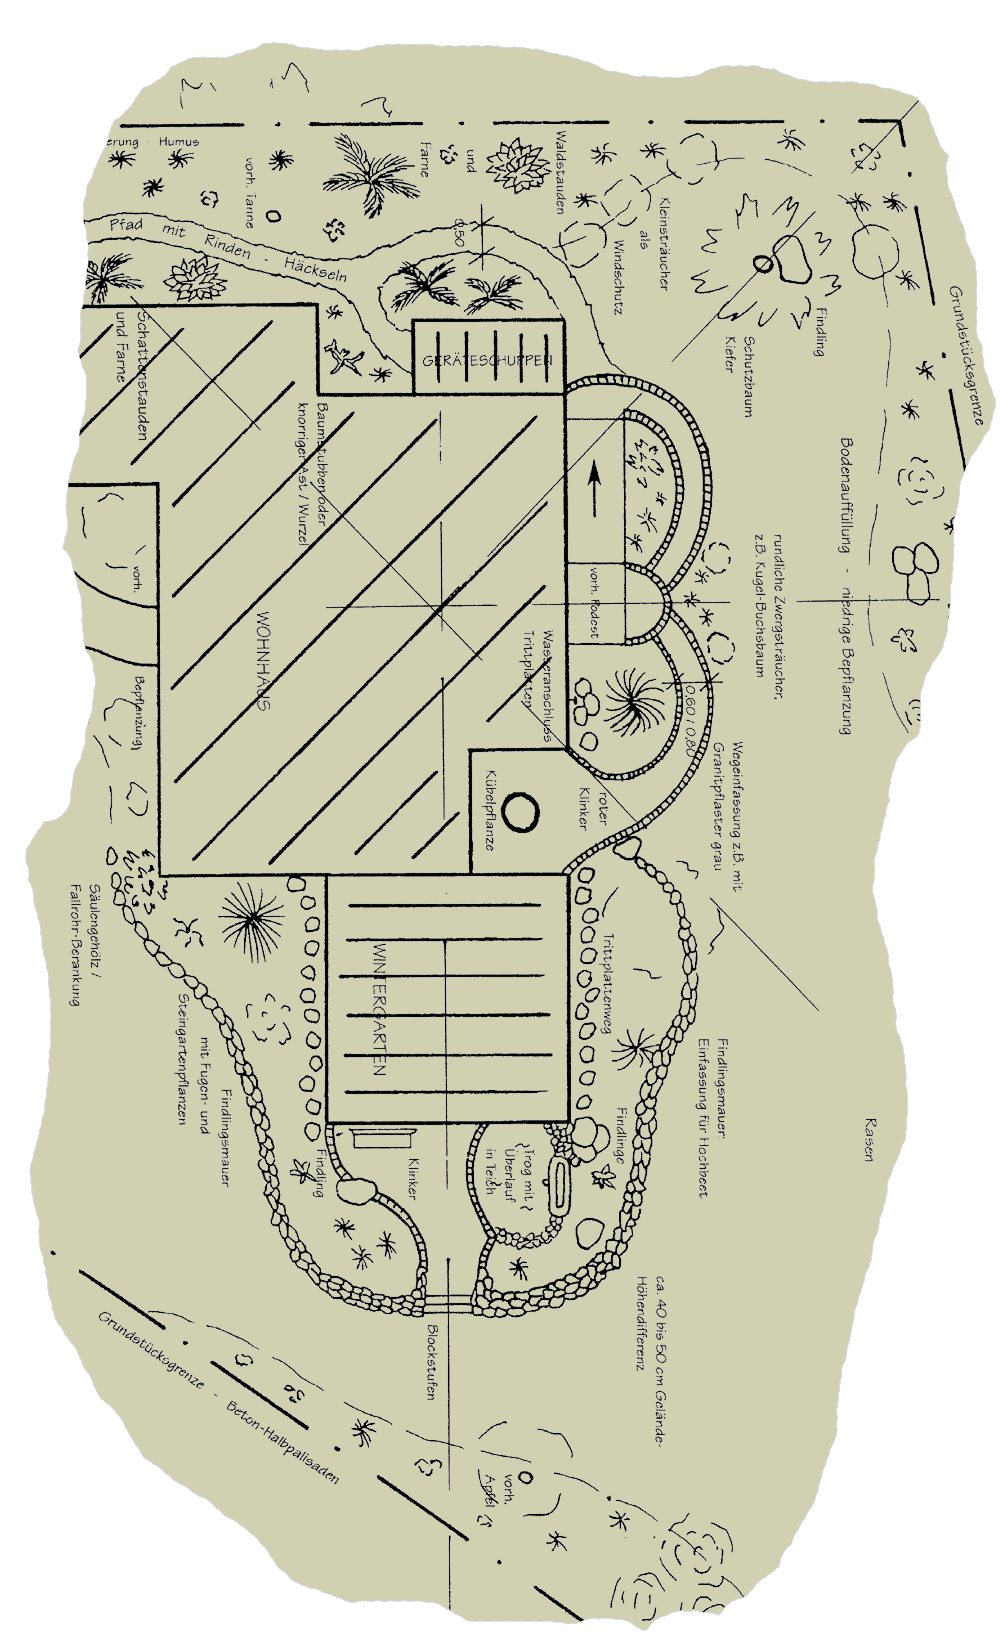 Plan eines Landhausgartens